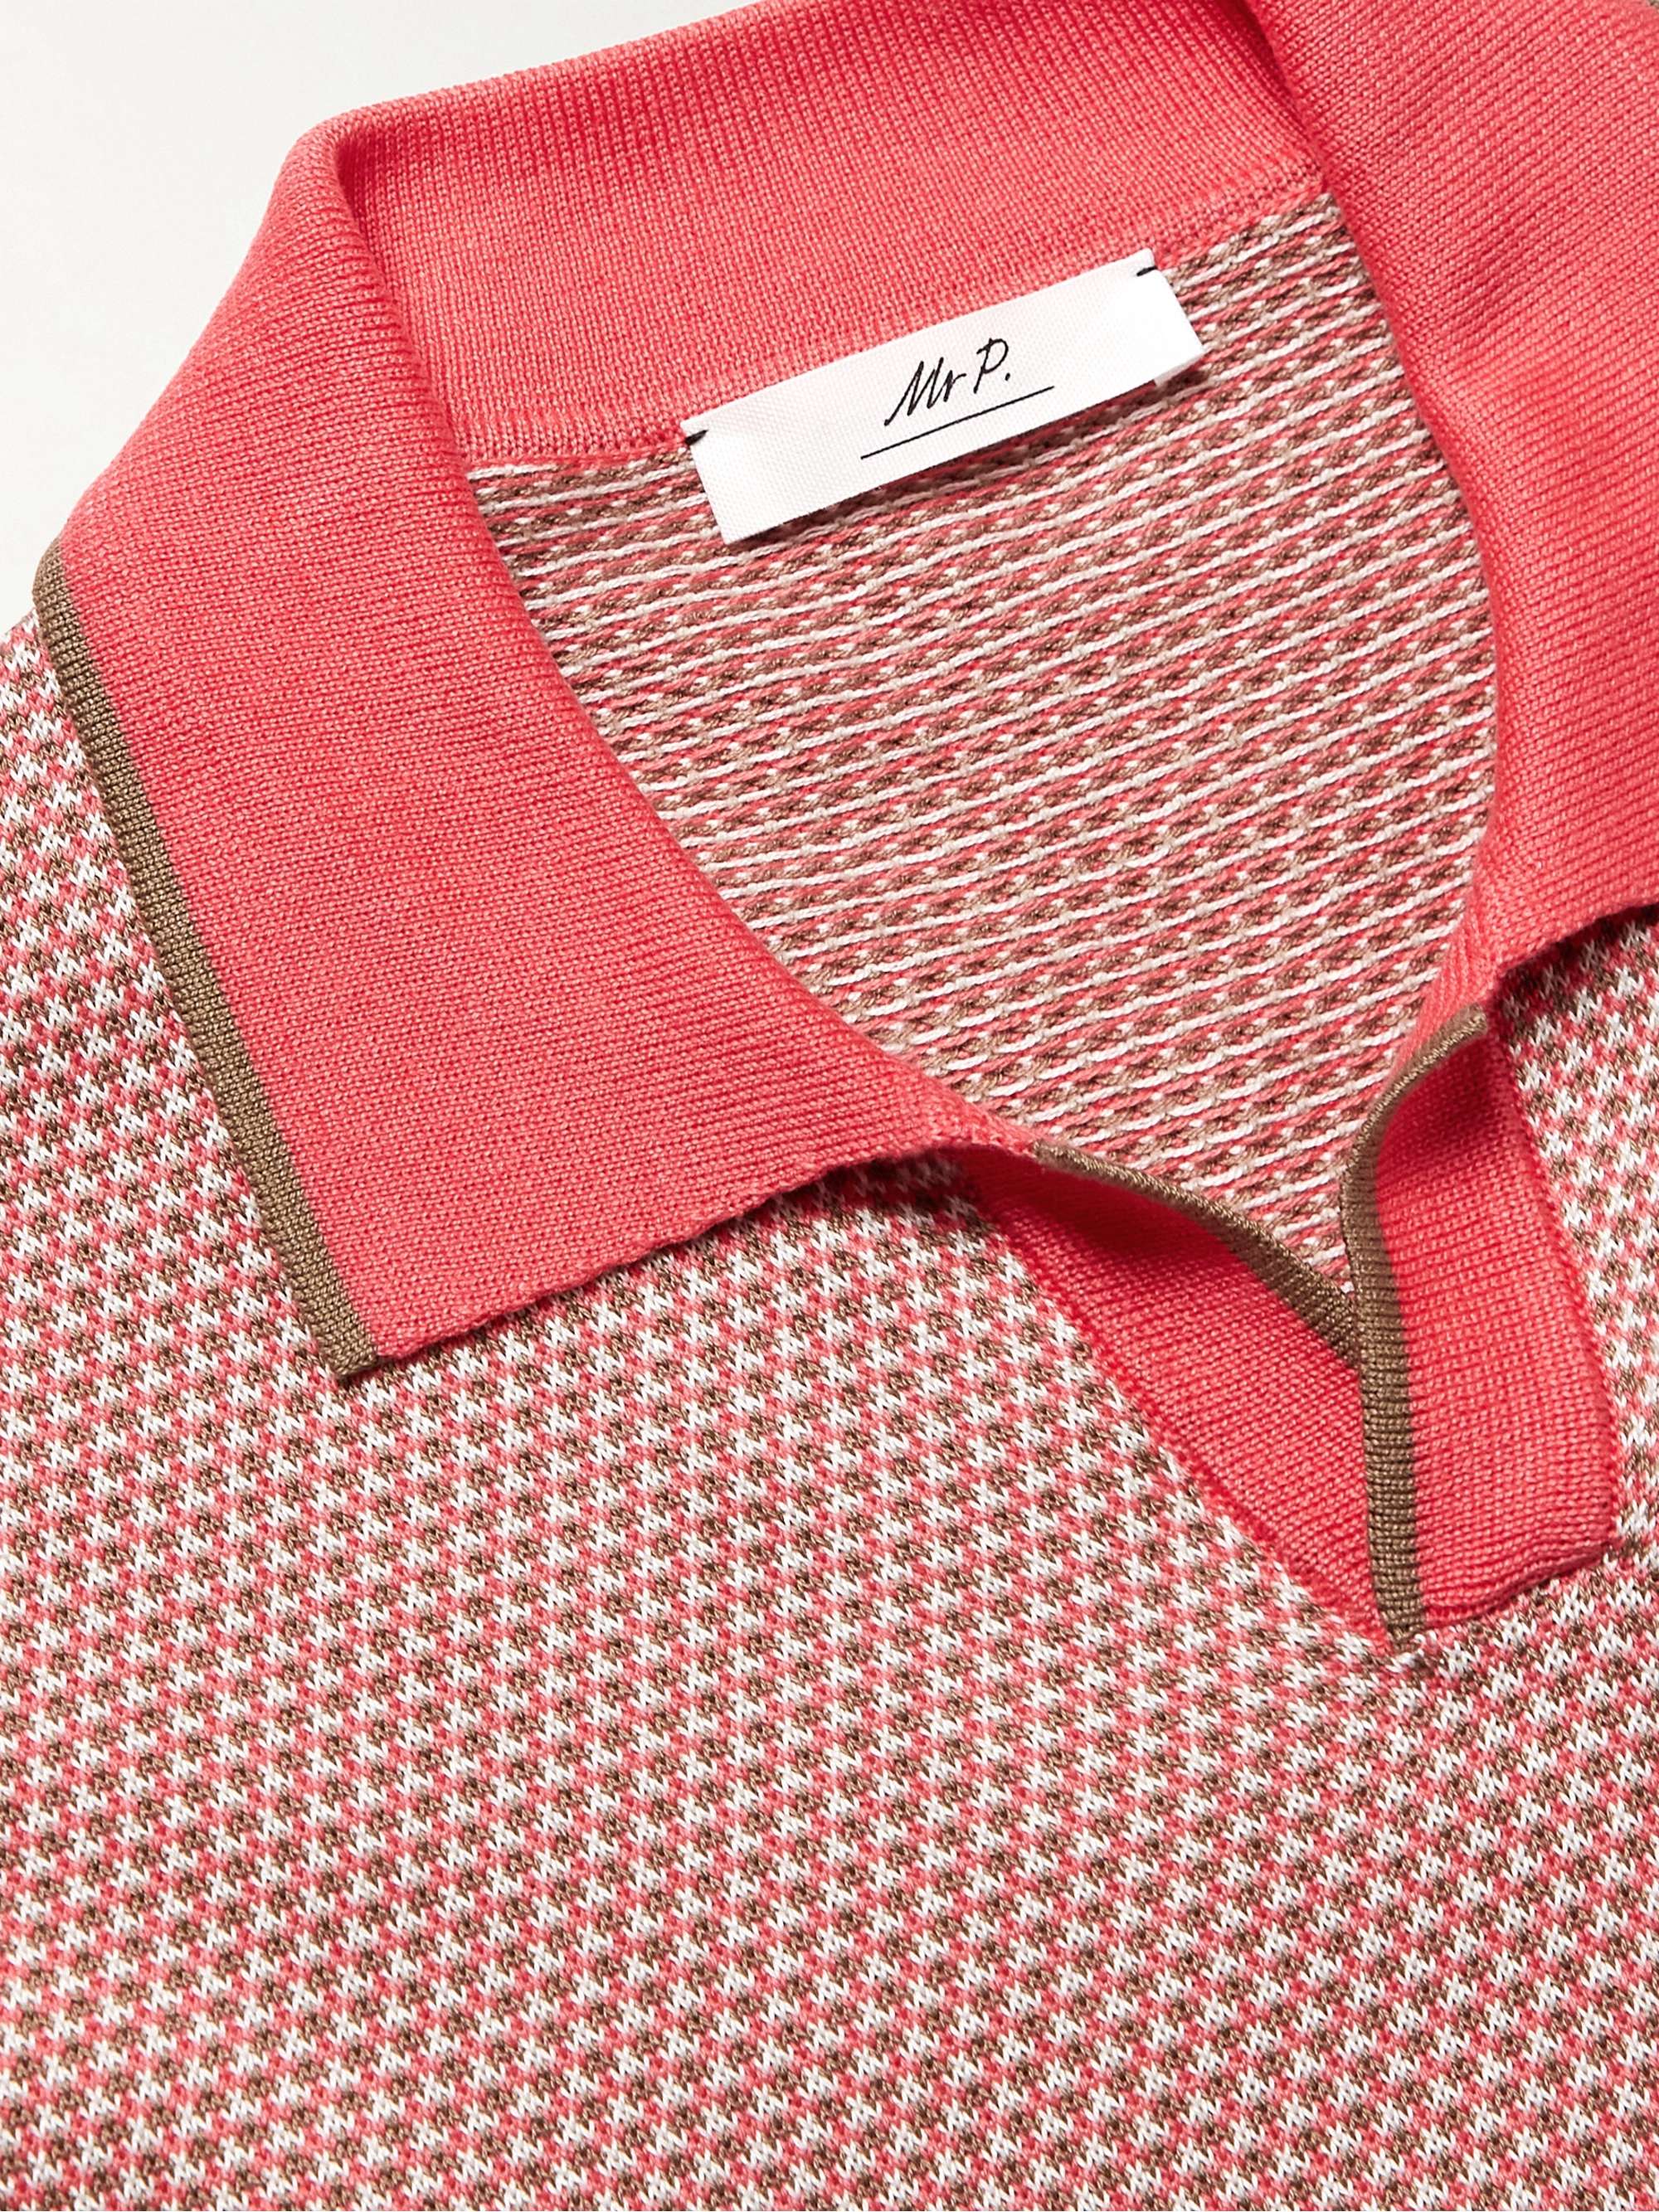 MR P. Slim-Fit Honeycomb-Knit Cotton Polo Shirt